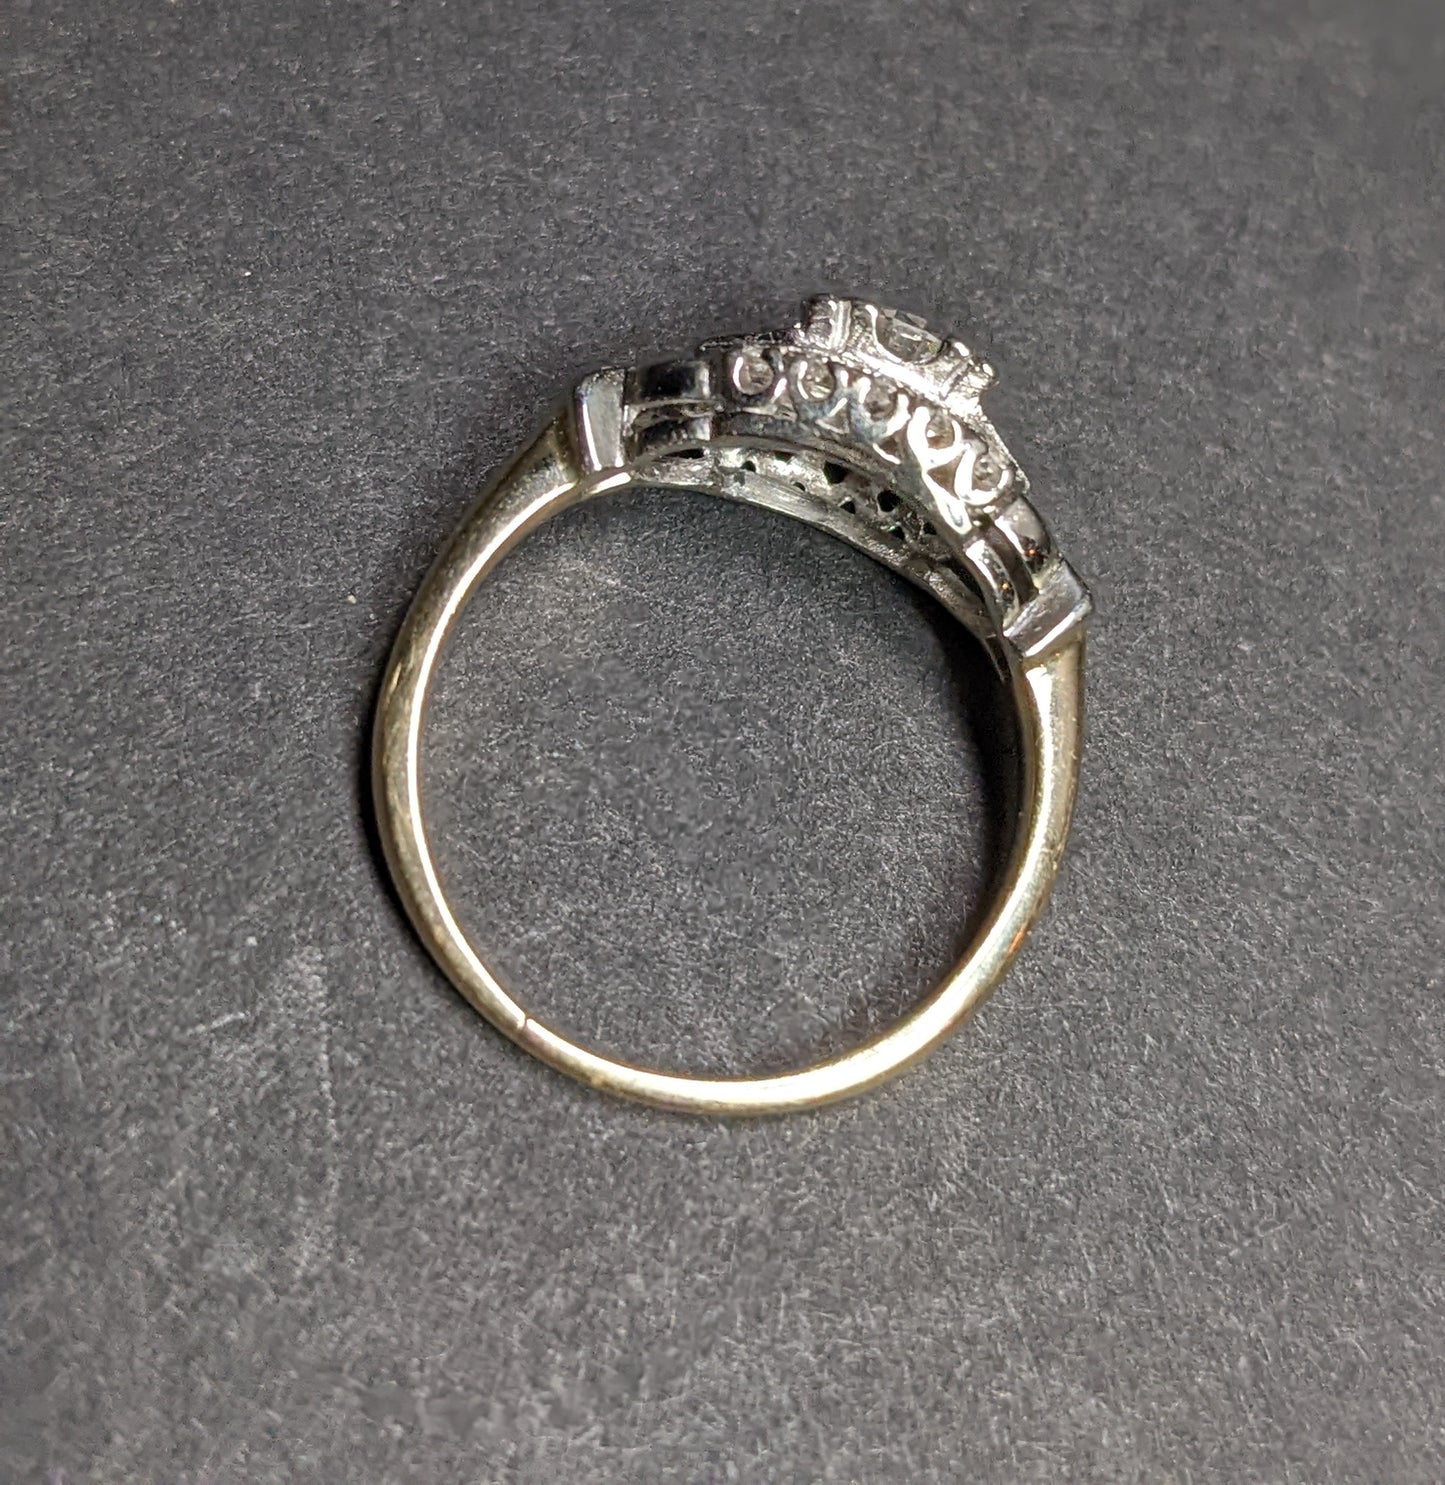 1930's transitional cut diamond ring